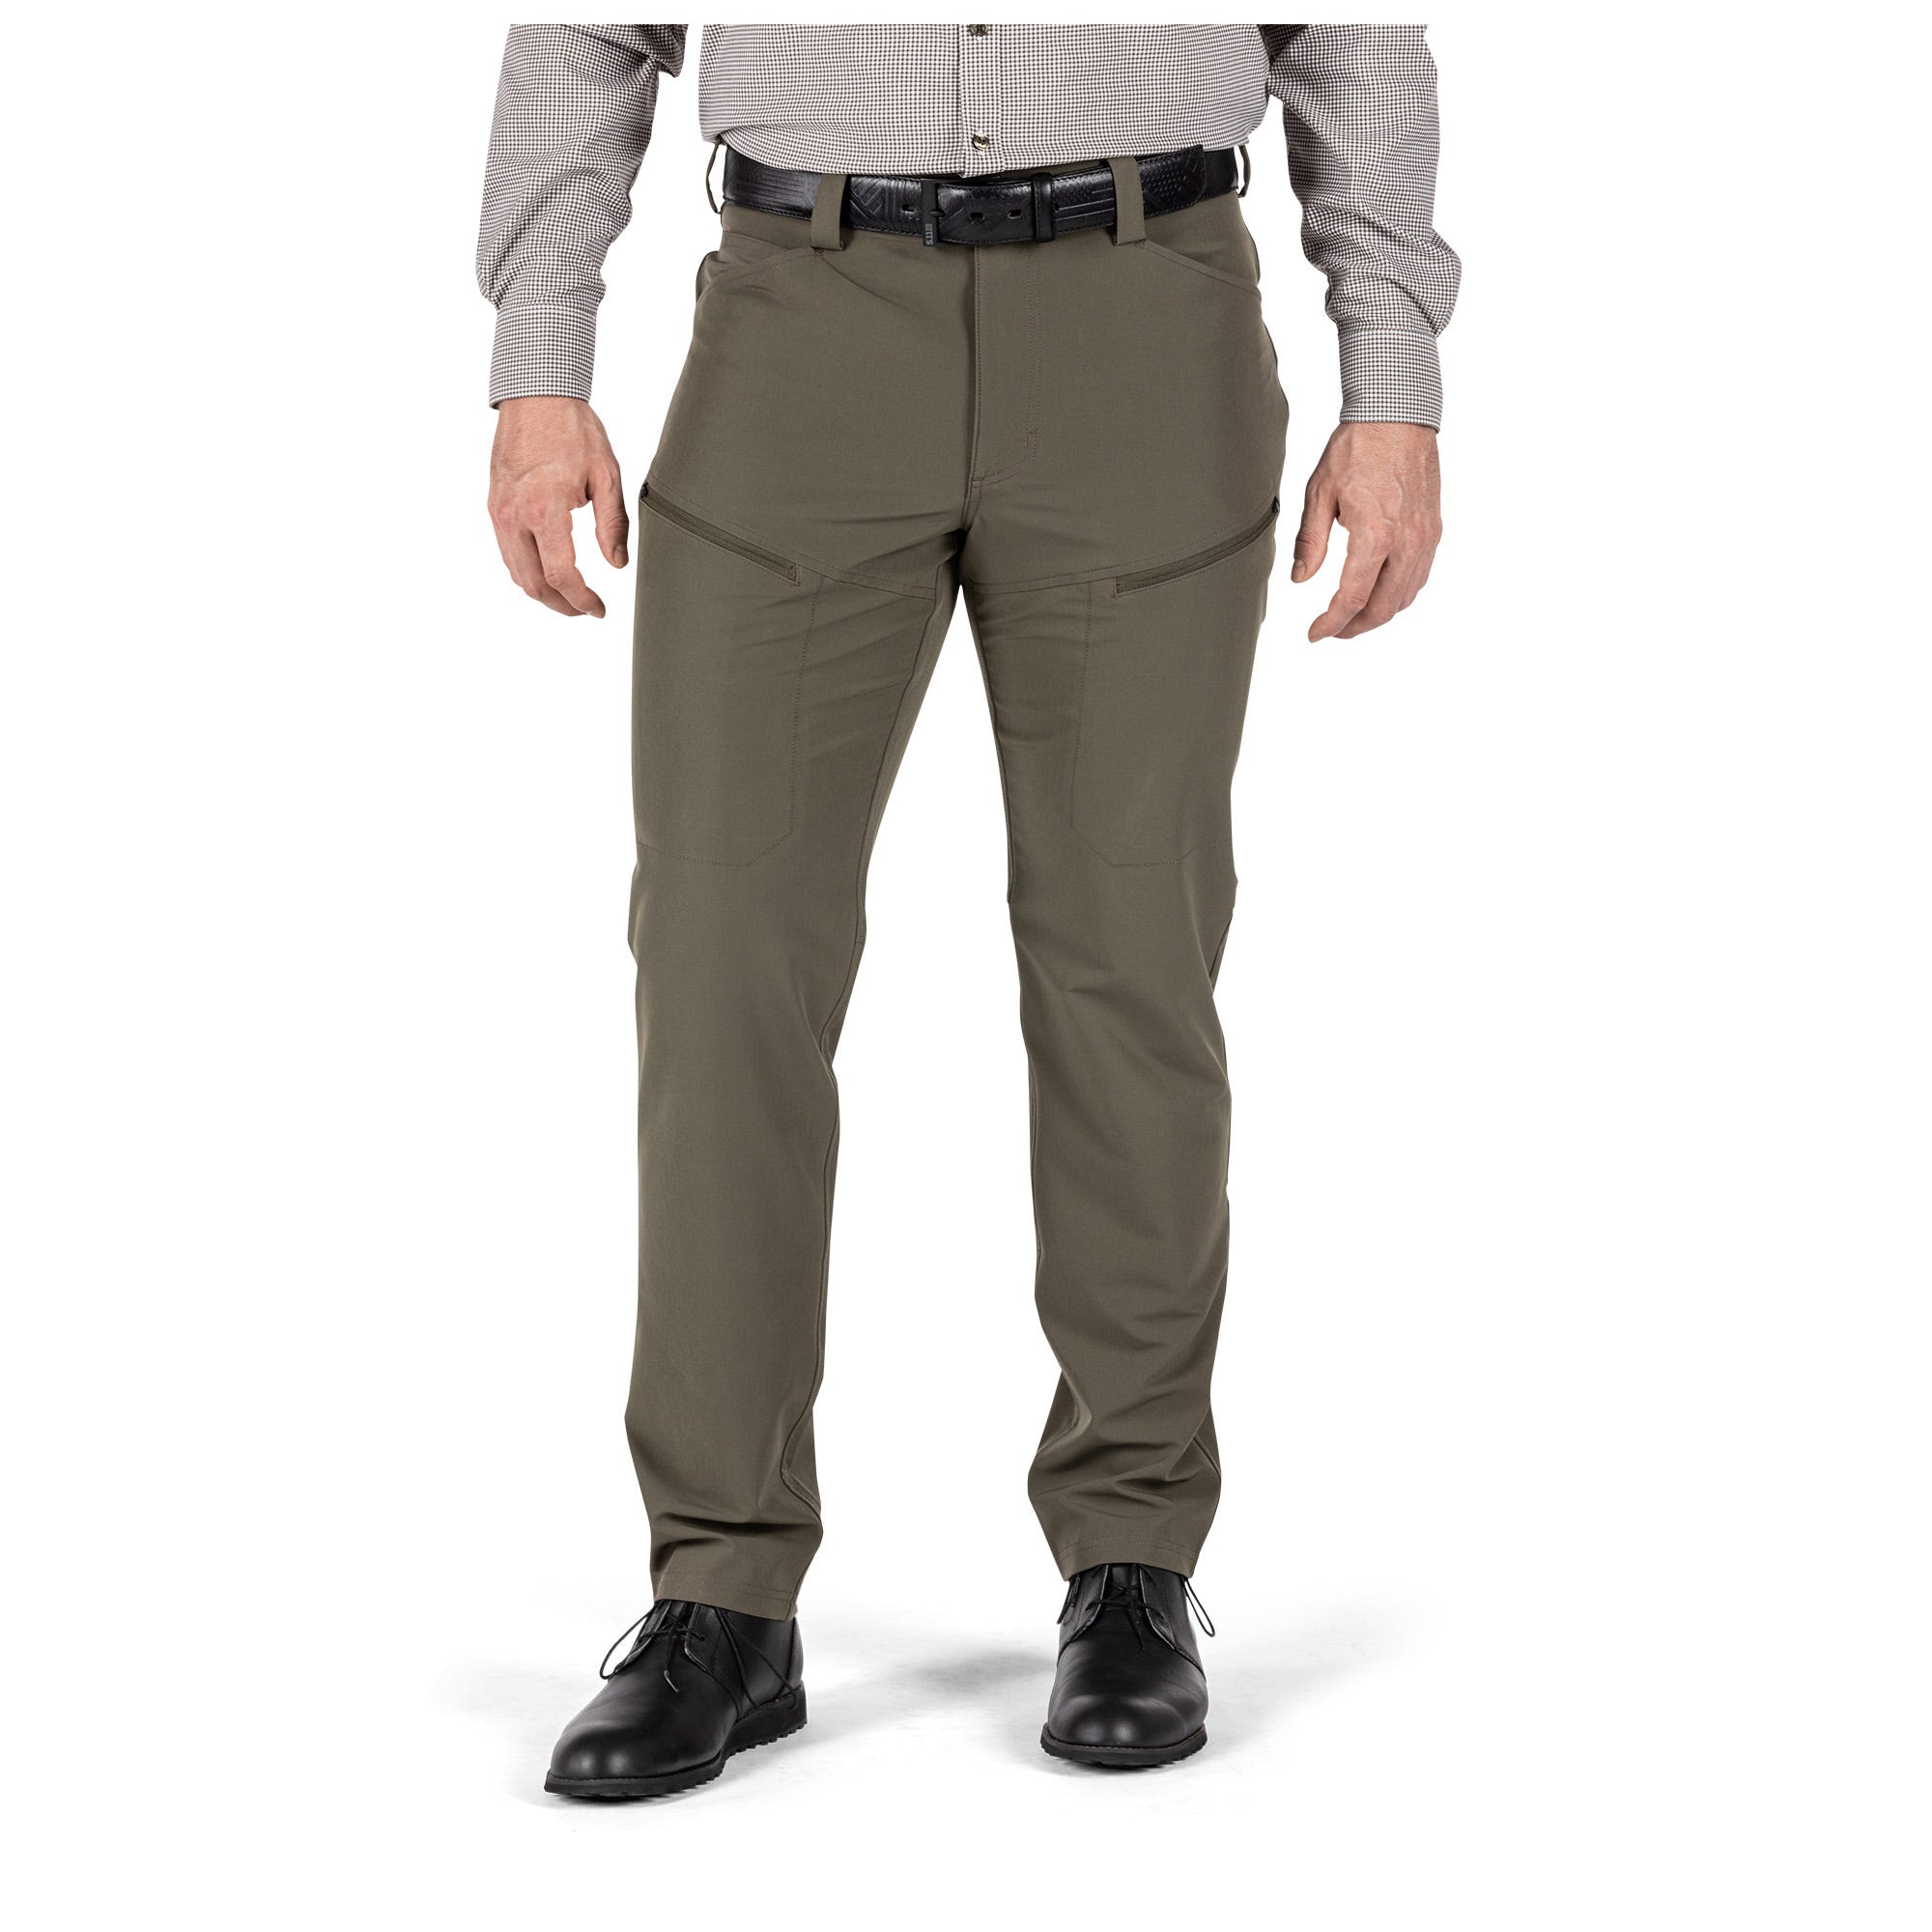 5.11 Tactical Men's Edge Chino Pants Waist 28-44 Style 74481 Inseam 30-36 